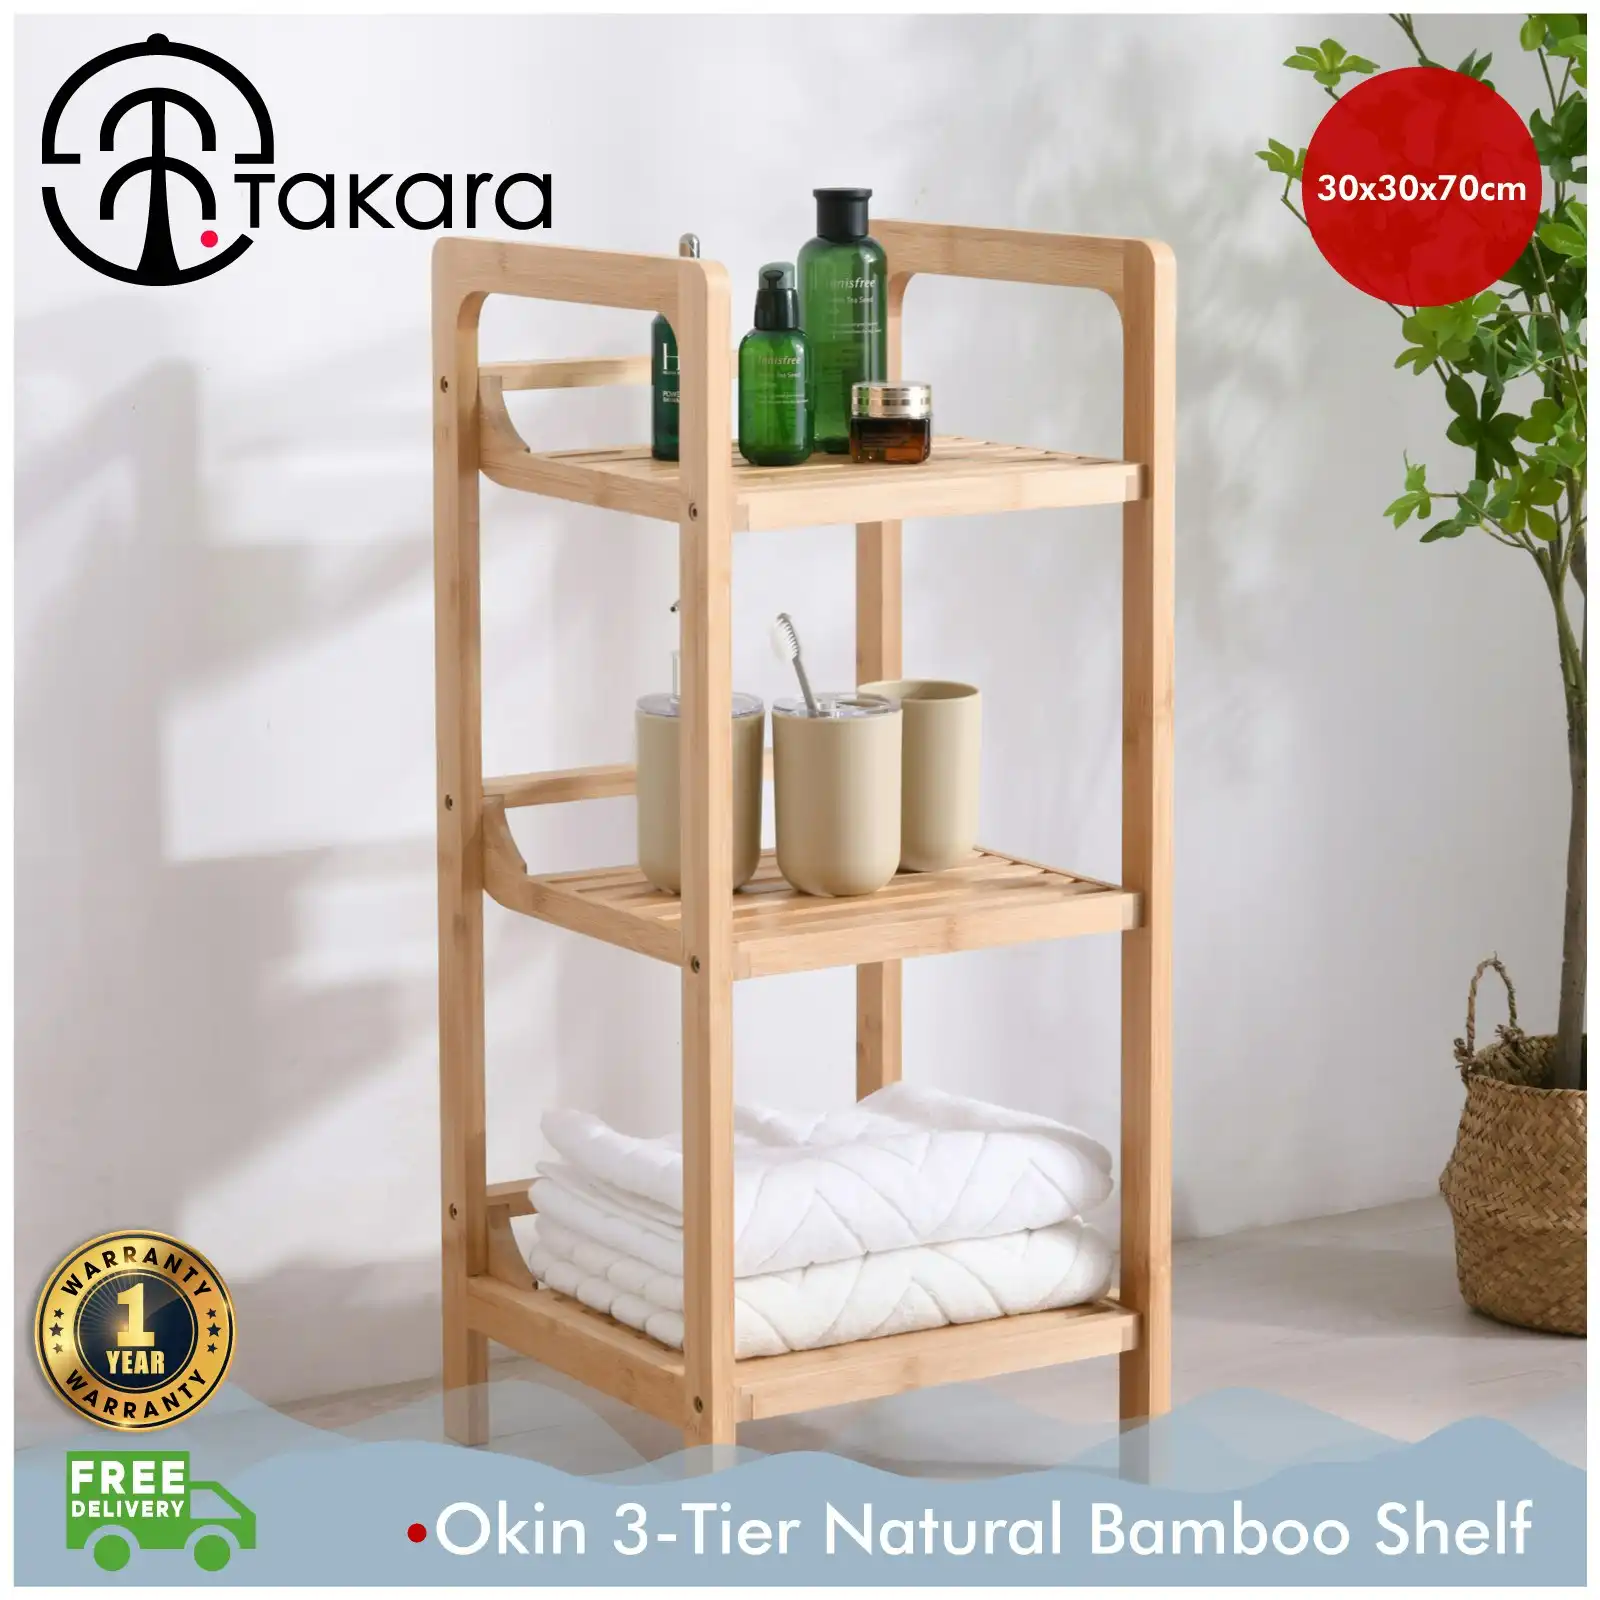 Takara Okin 3-Tier Natural Bamboo Shelf Natural Colour 30x30x70cm